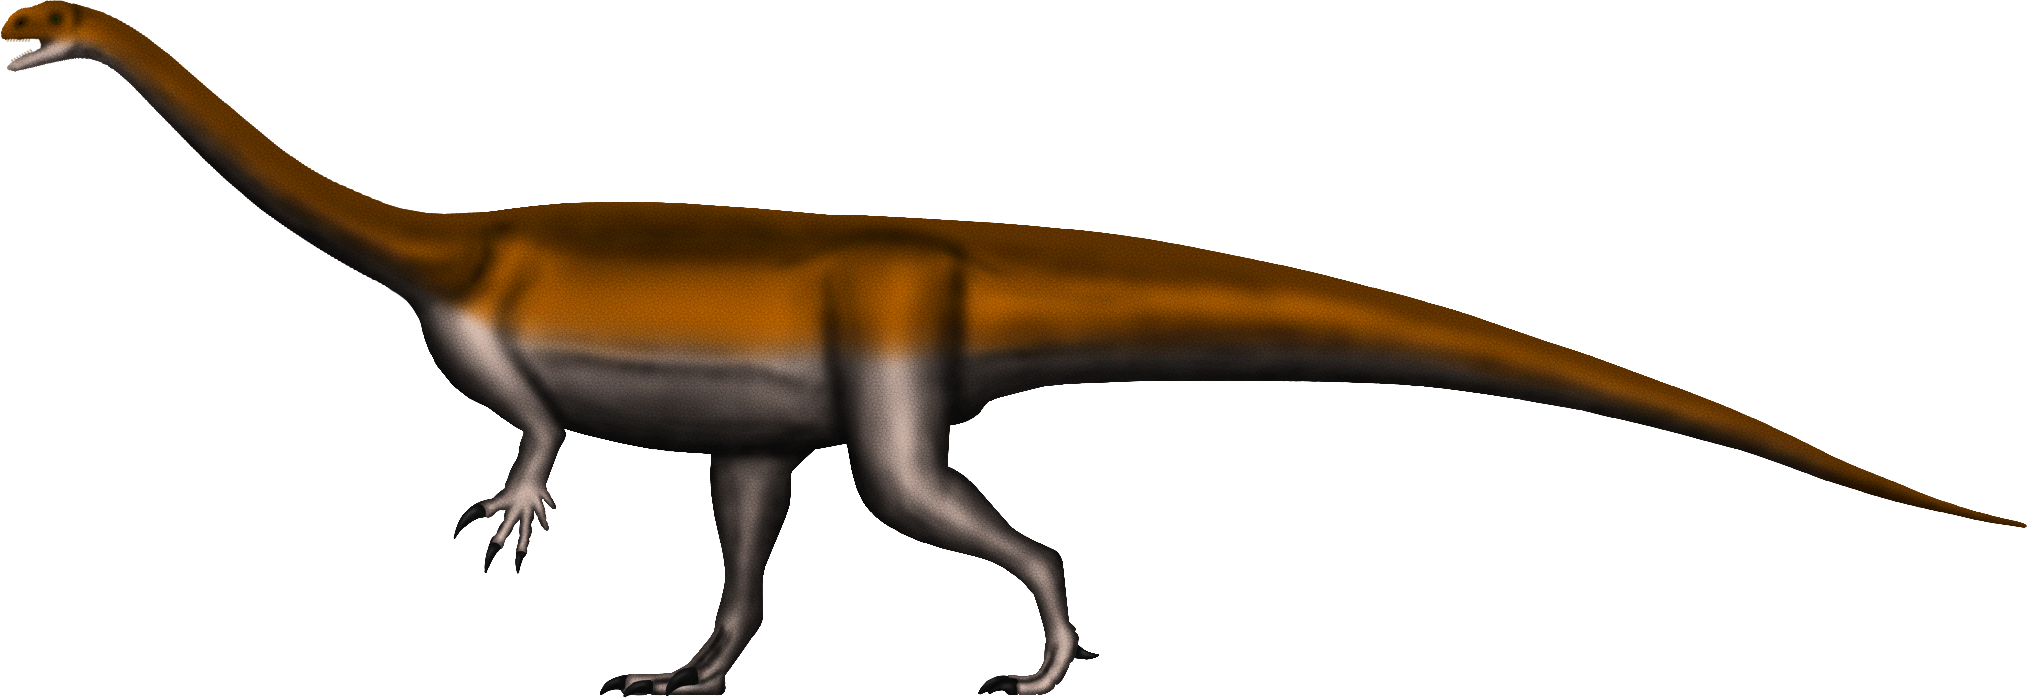 Glacialisaurus hammeri